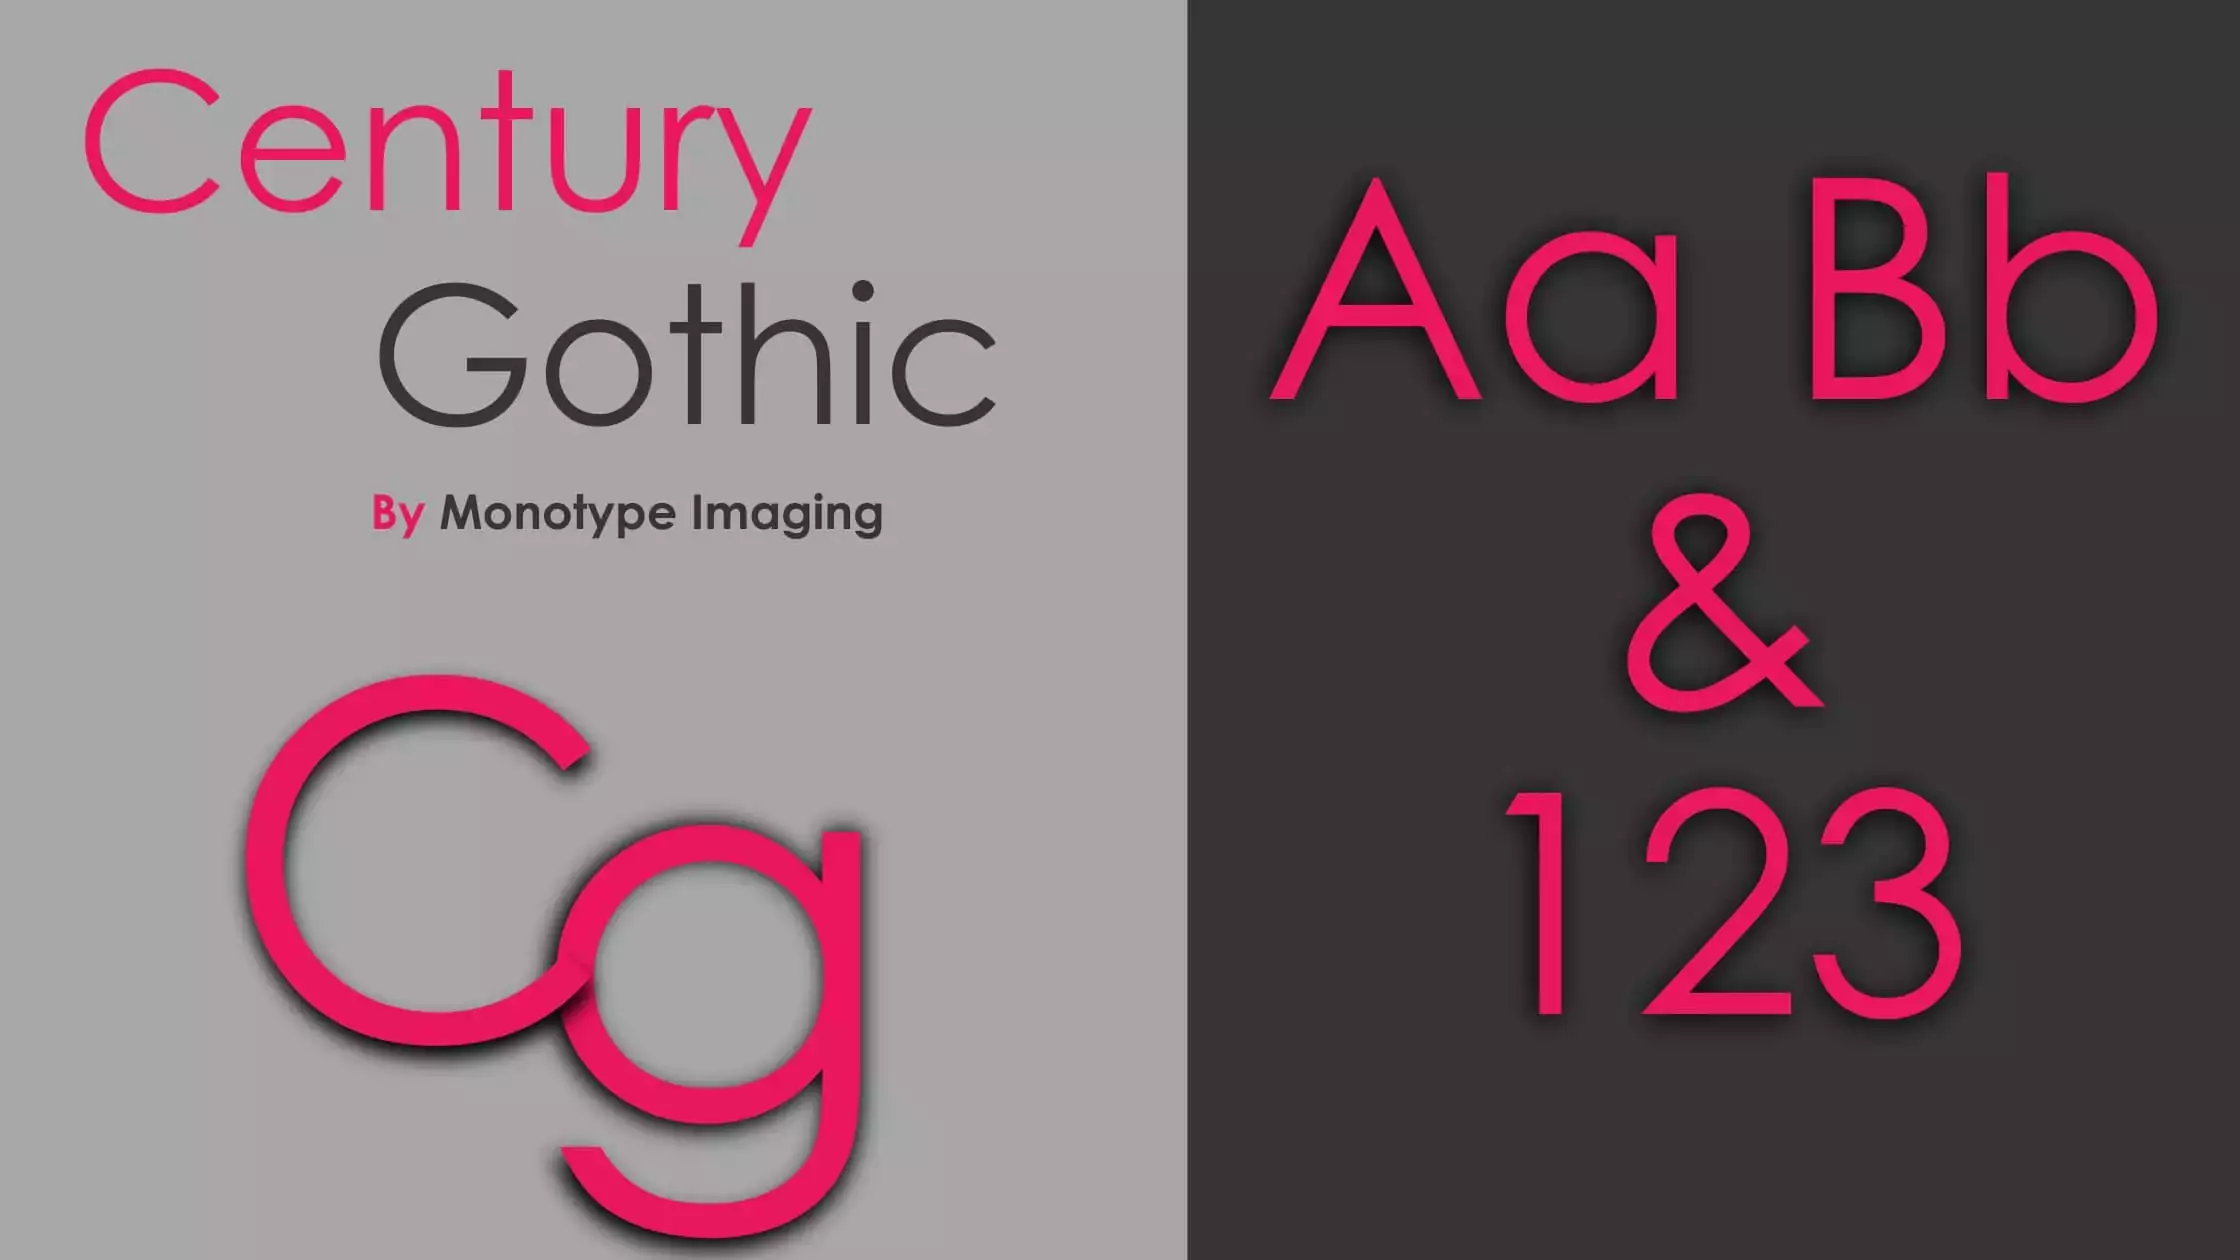 Century Gothic Font Download